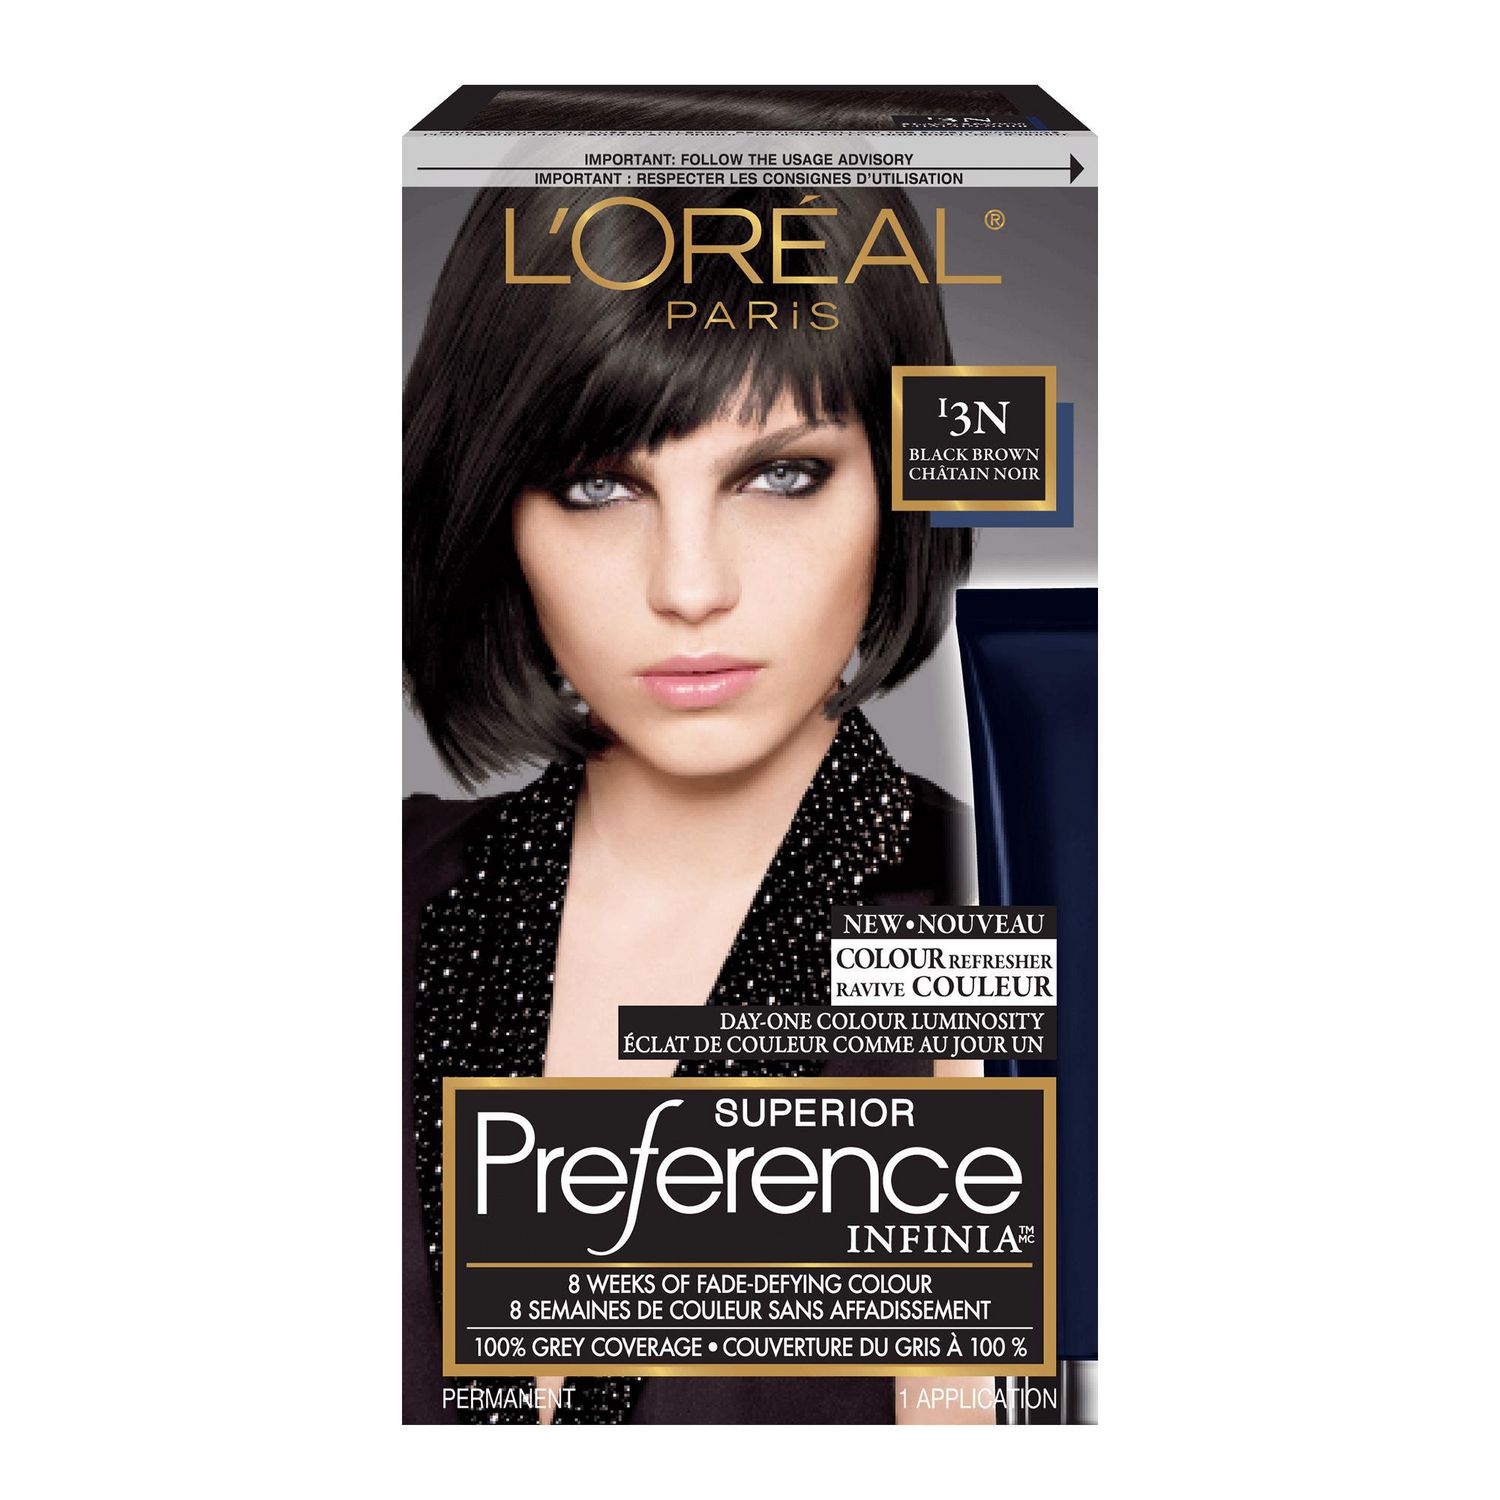 LOreal Paris Superior Preference Infinia Permanent Hair Colour